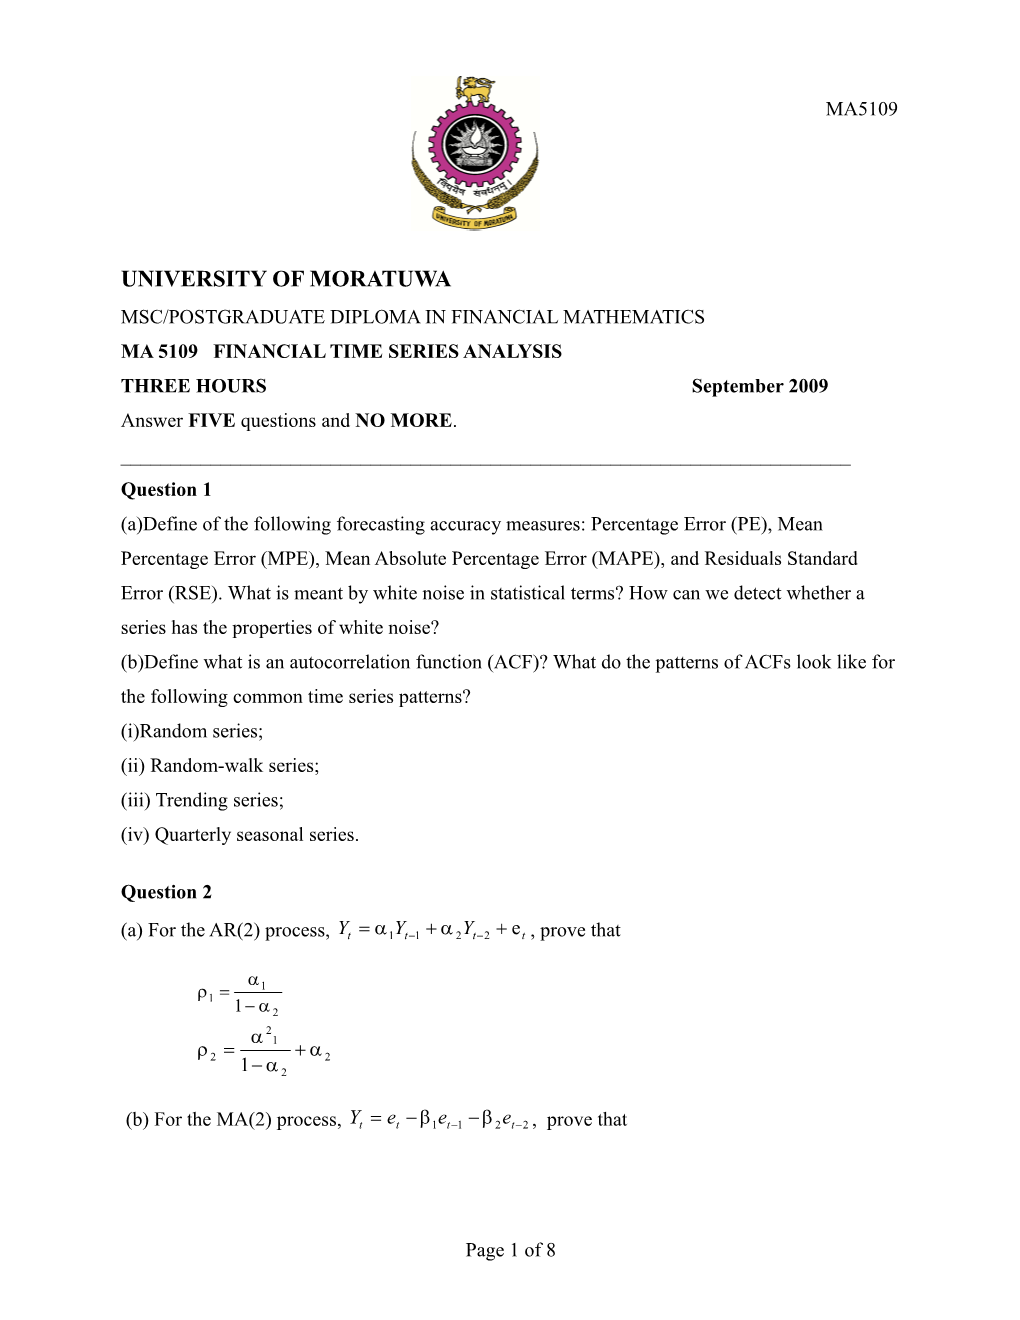 Msc/Postgraduate Diploma in Financial Mathematics